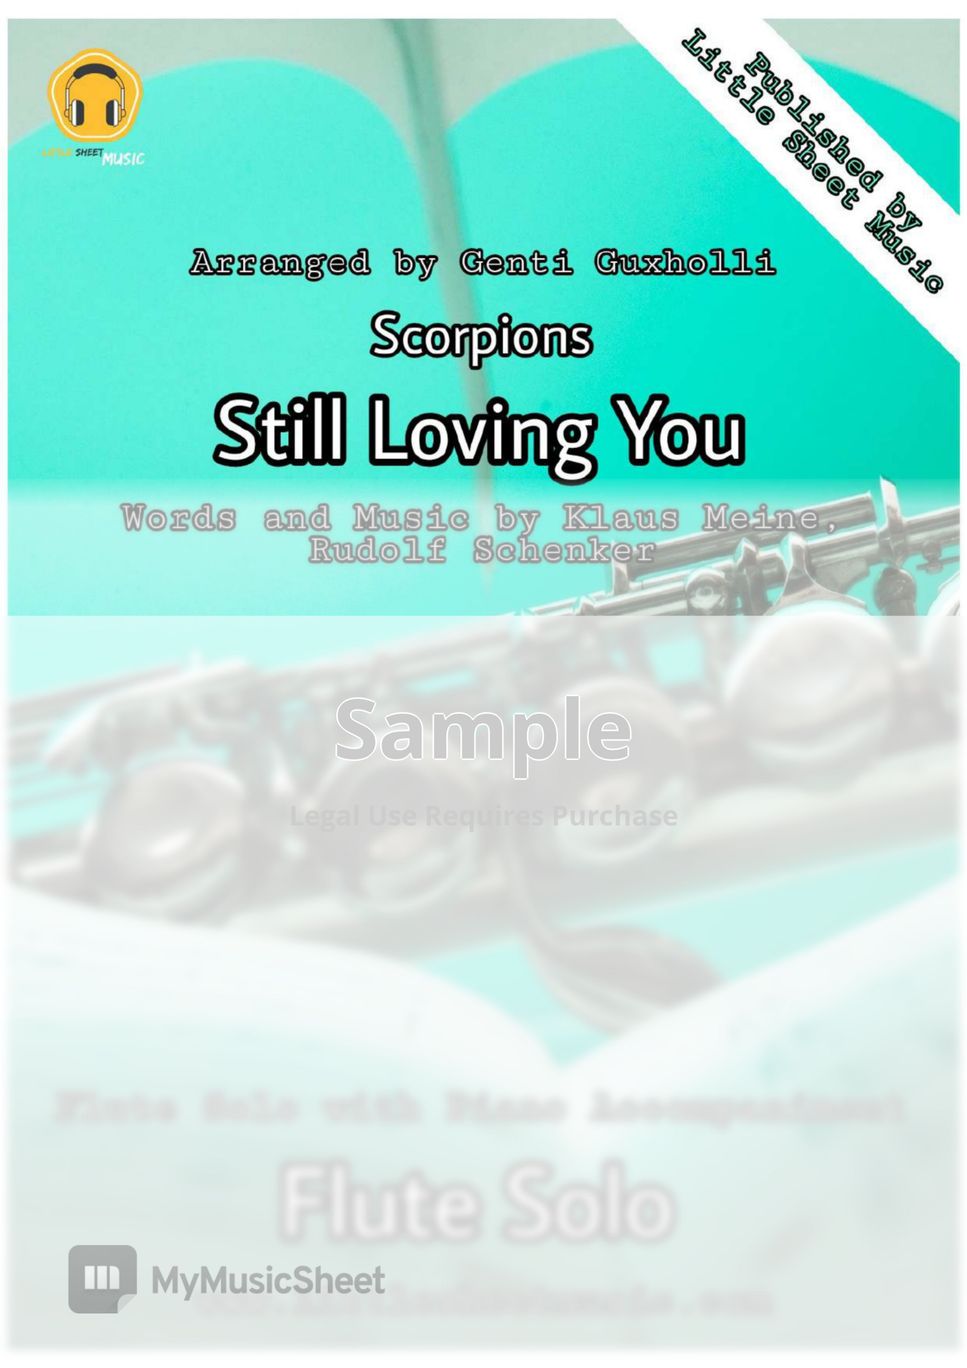 Scorpions - Still Loving You (Flute Solo with Piano Accompaniment) by Genti Guxholli